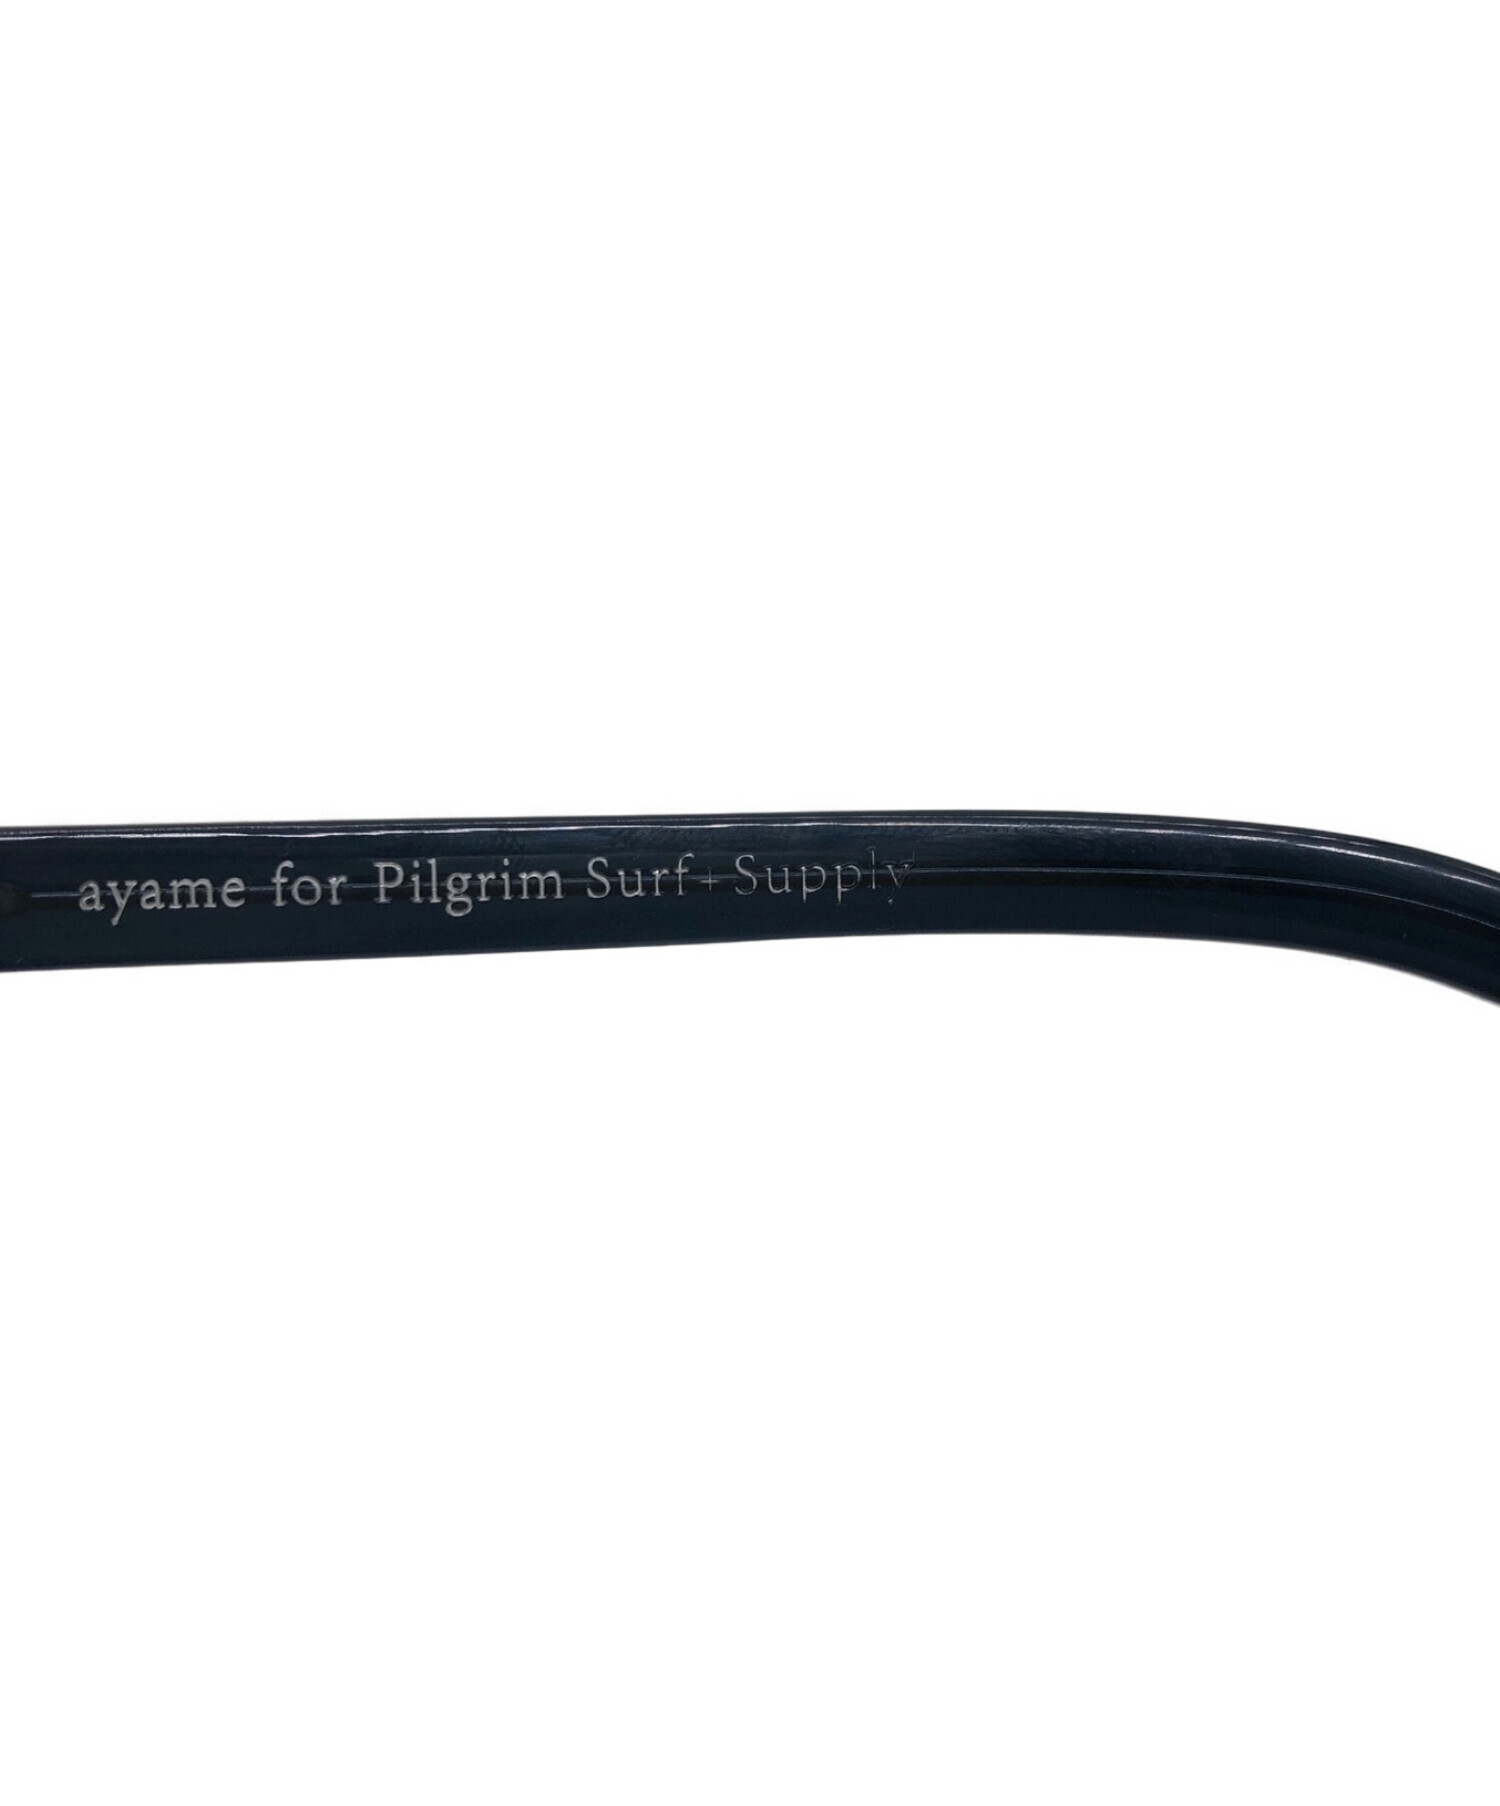 Ayame (アヤメ) Pilgrim Surf+Supply (ピルグリム サーフ+サプライ) NEWOLD ブラック サイズ:49□21